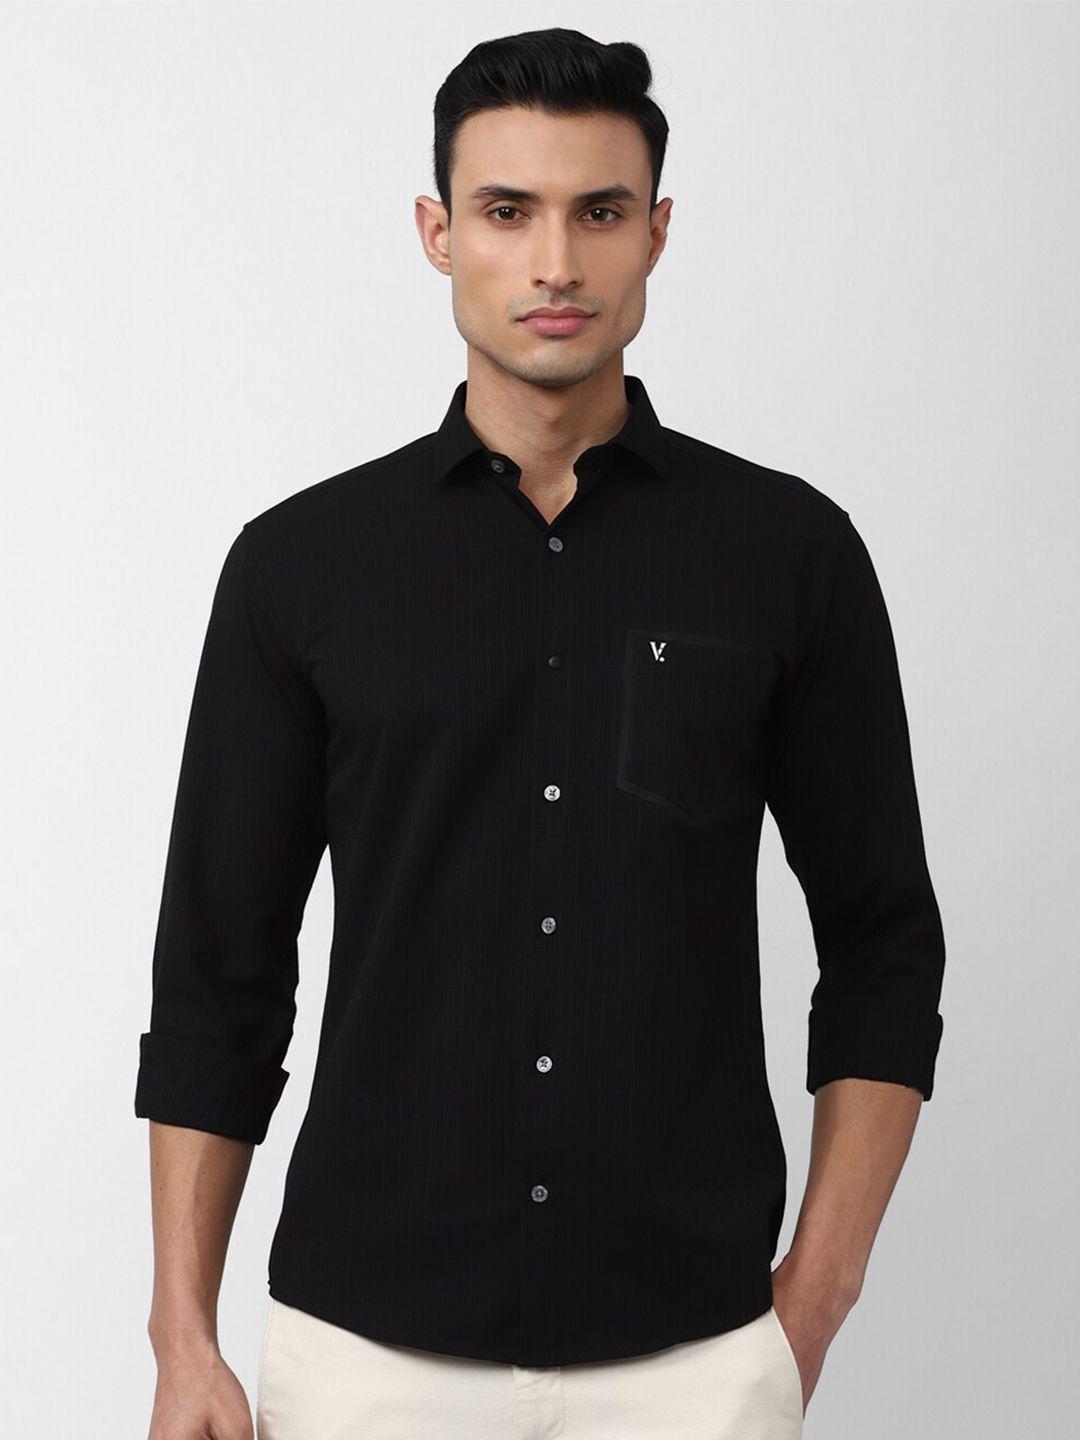 v dot men black slim fit casual shirt